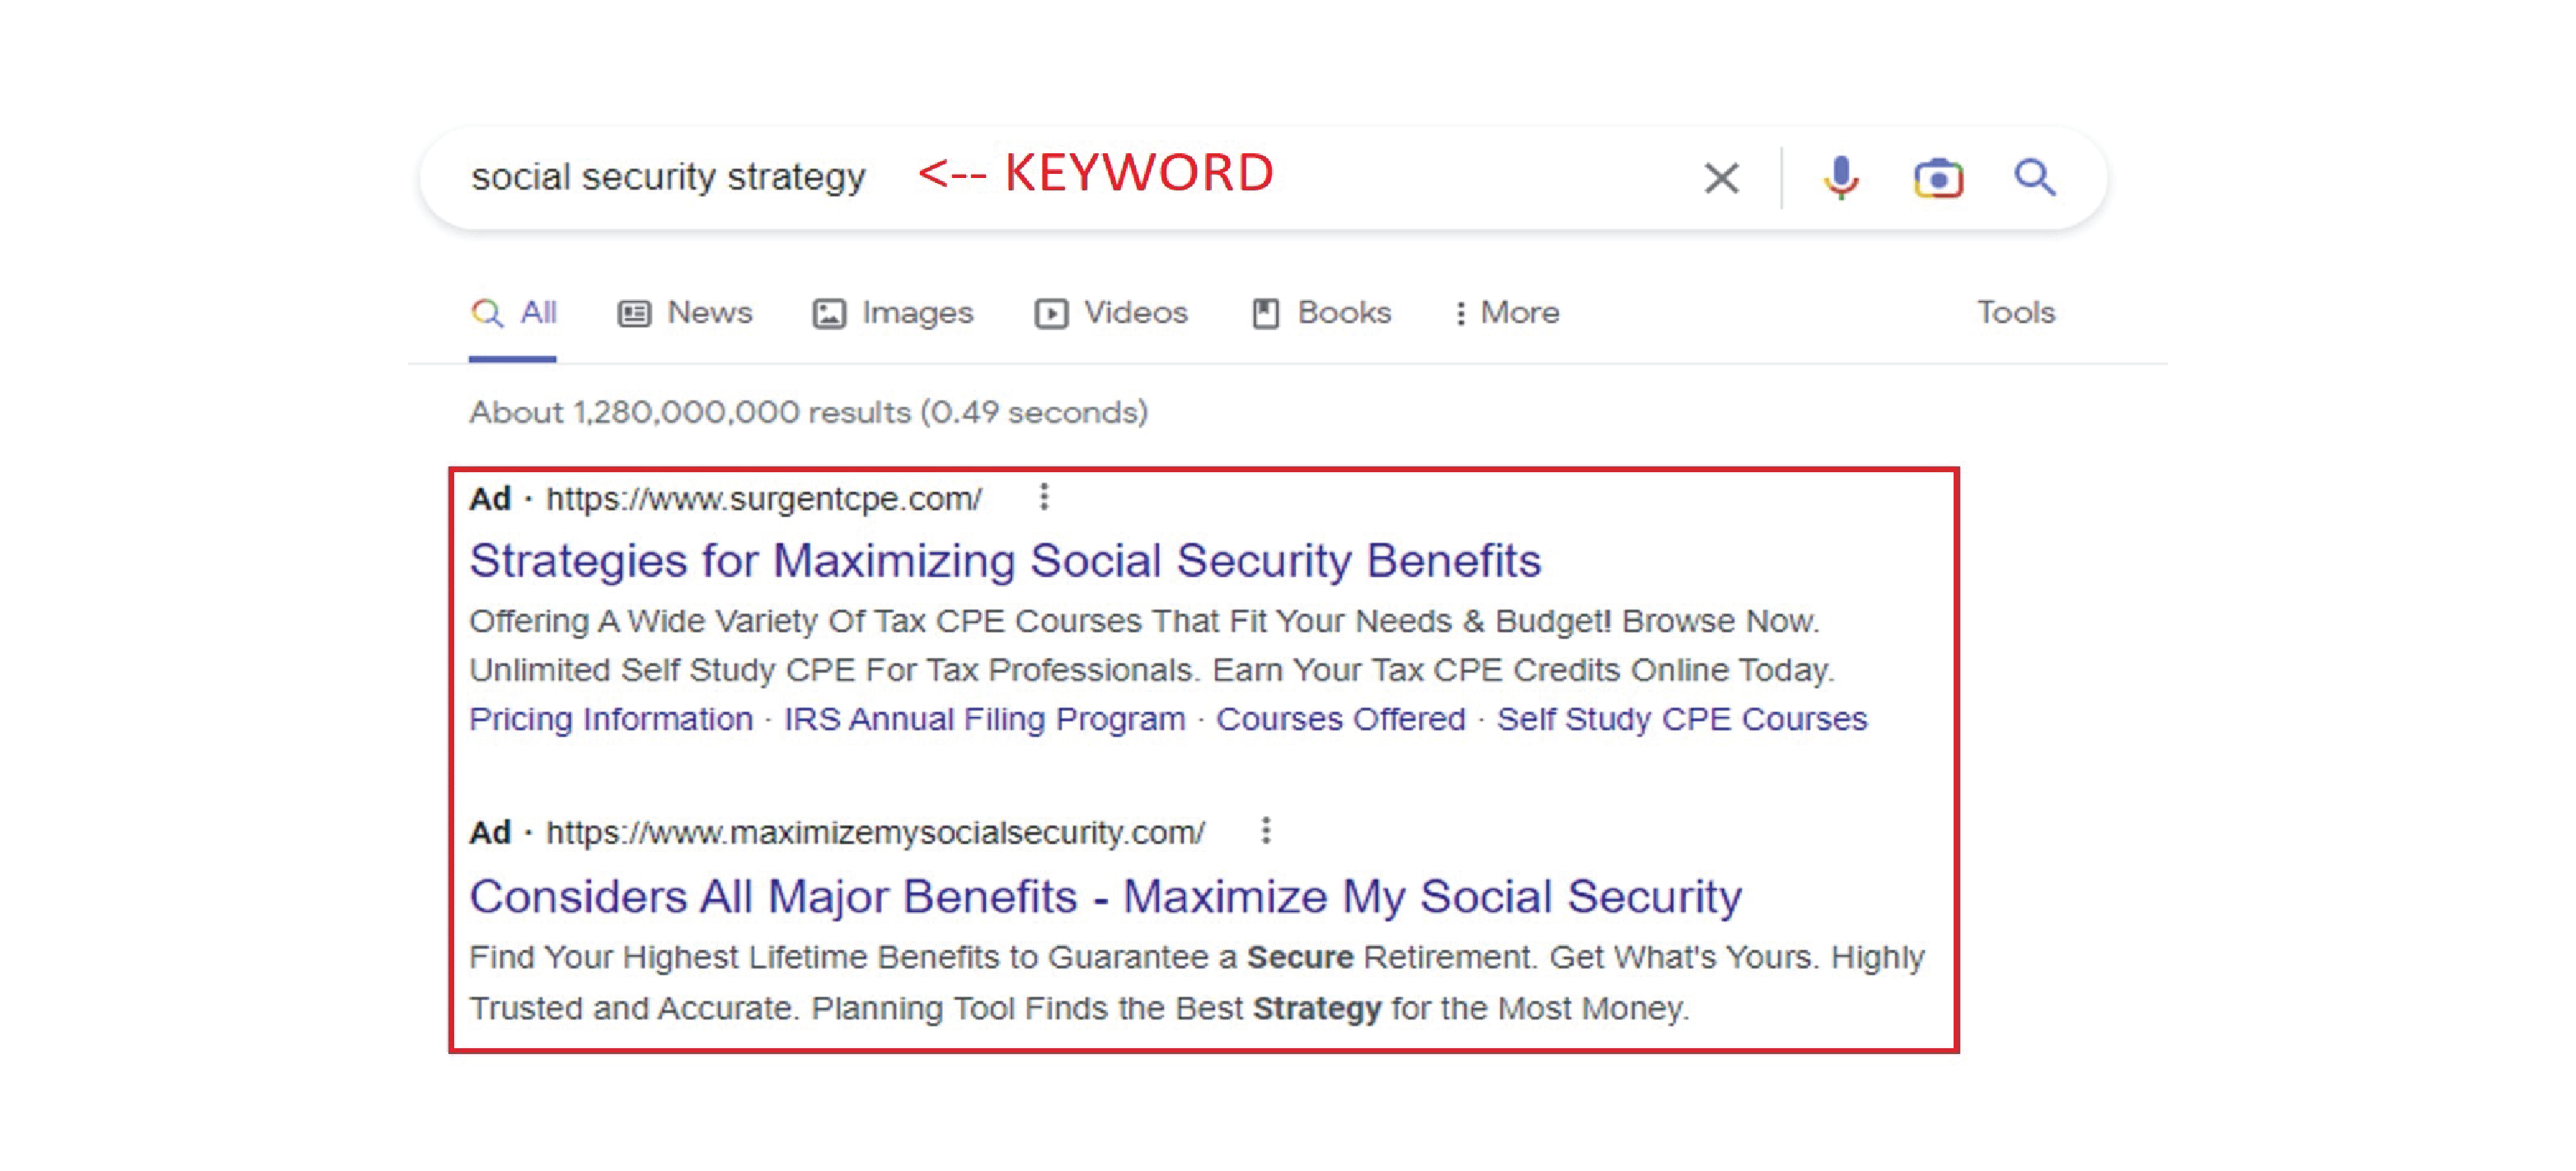 Google Search Social Security Strategy Keyword